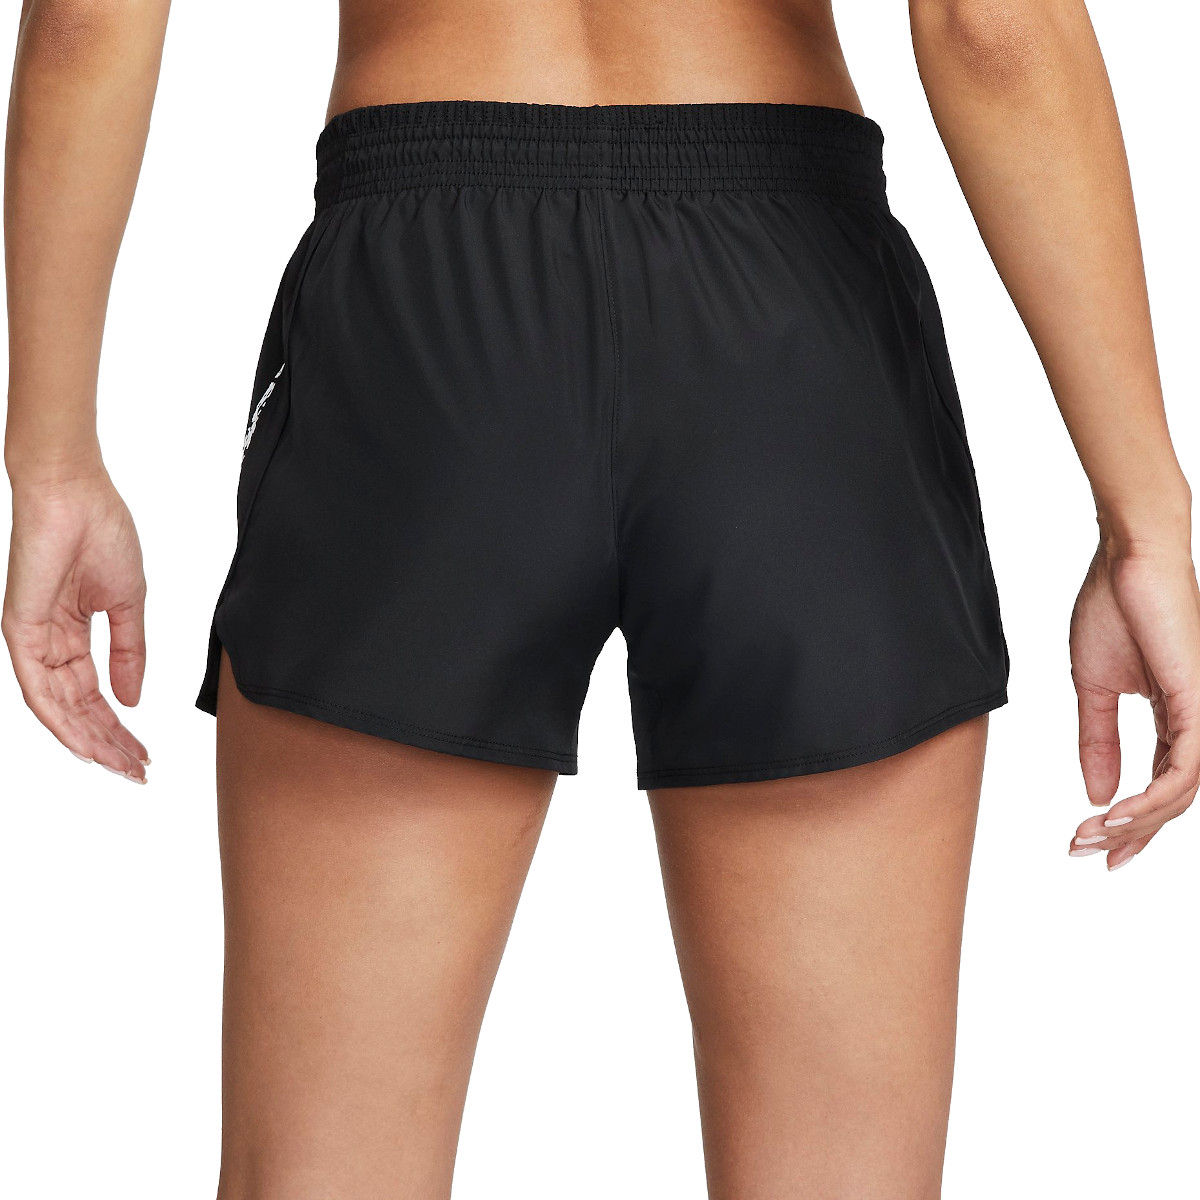  Nike Swoosh Run Women's Running Shorts Size XL